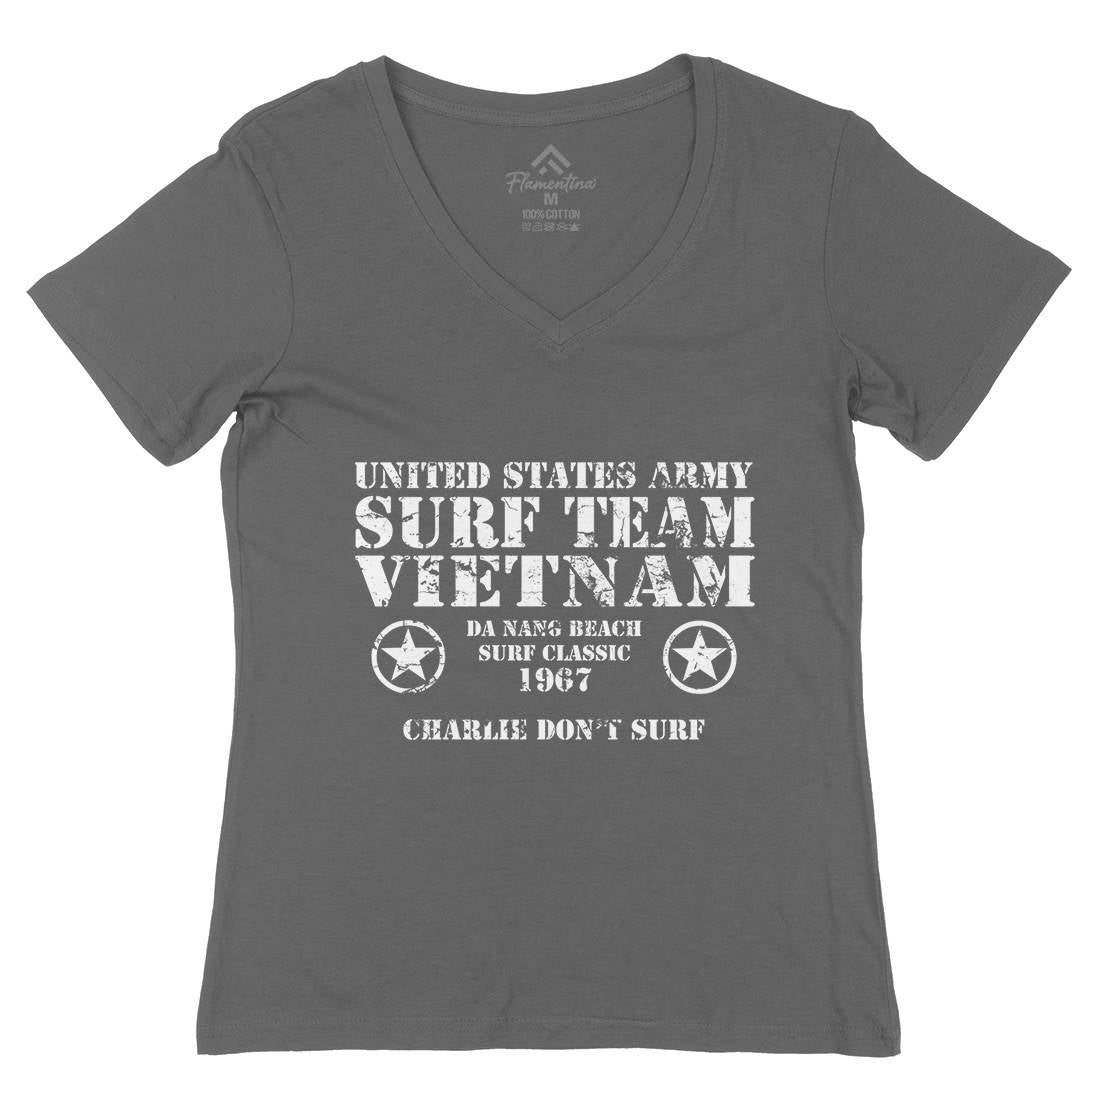 Surf Team Vietnam Womens Organic V-Neck T-Shirt Army D438